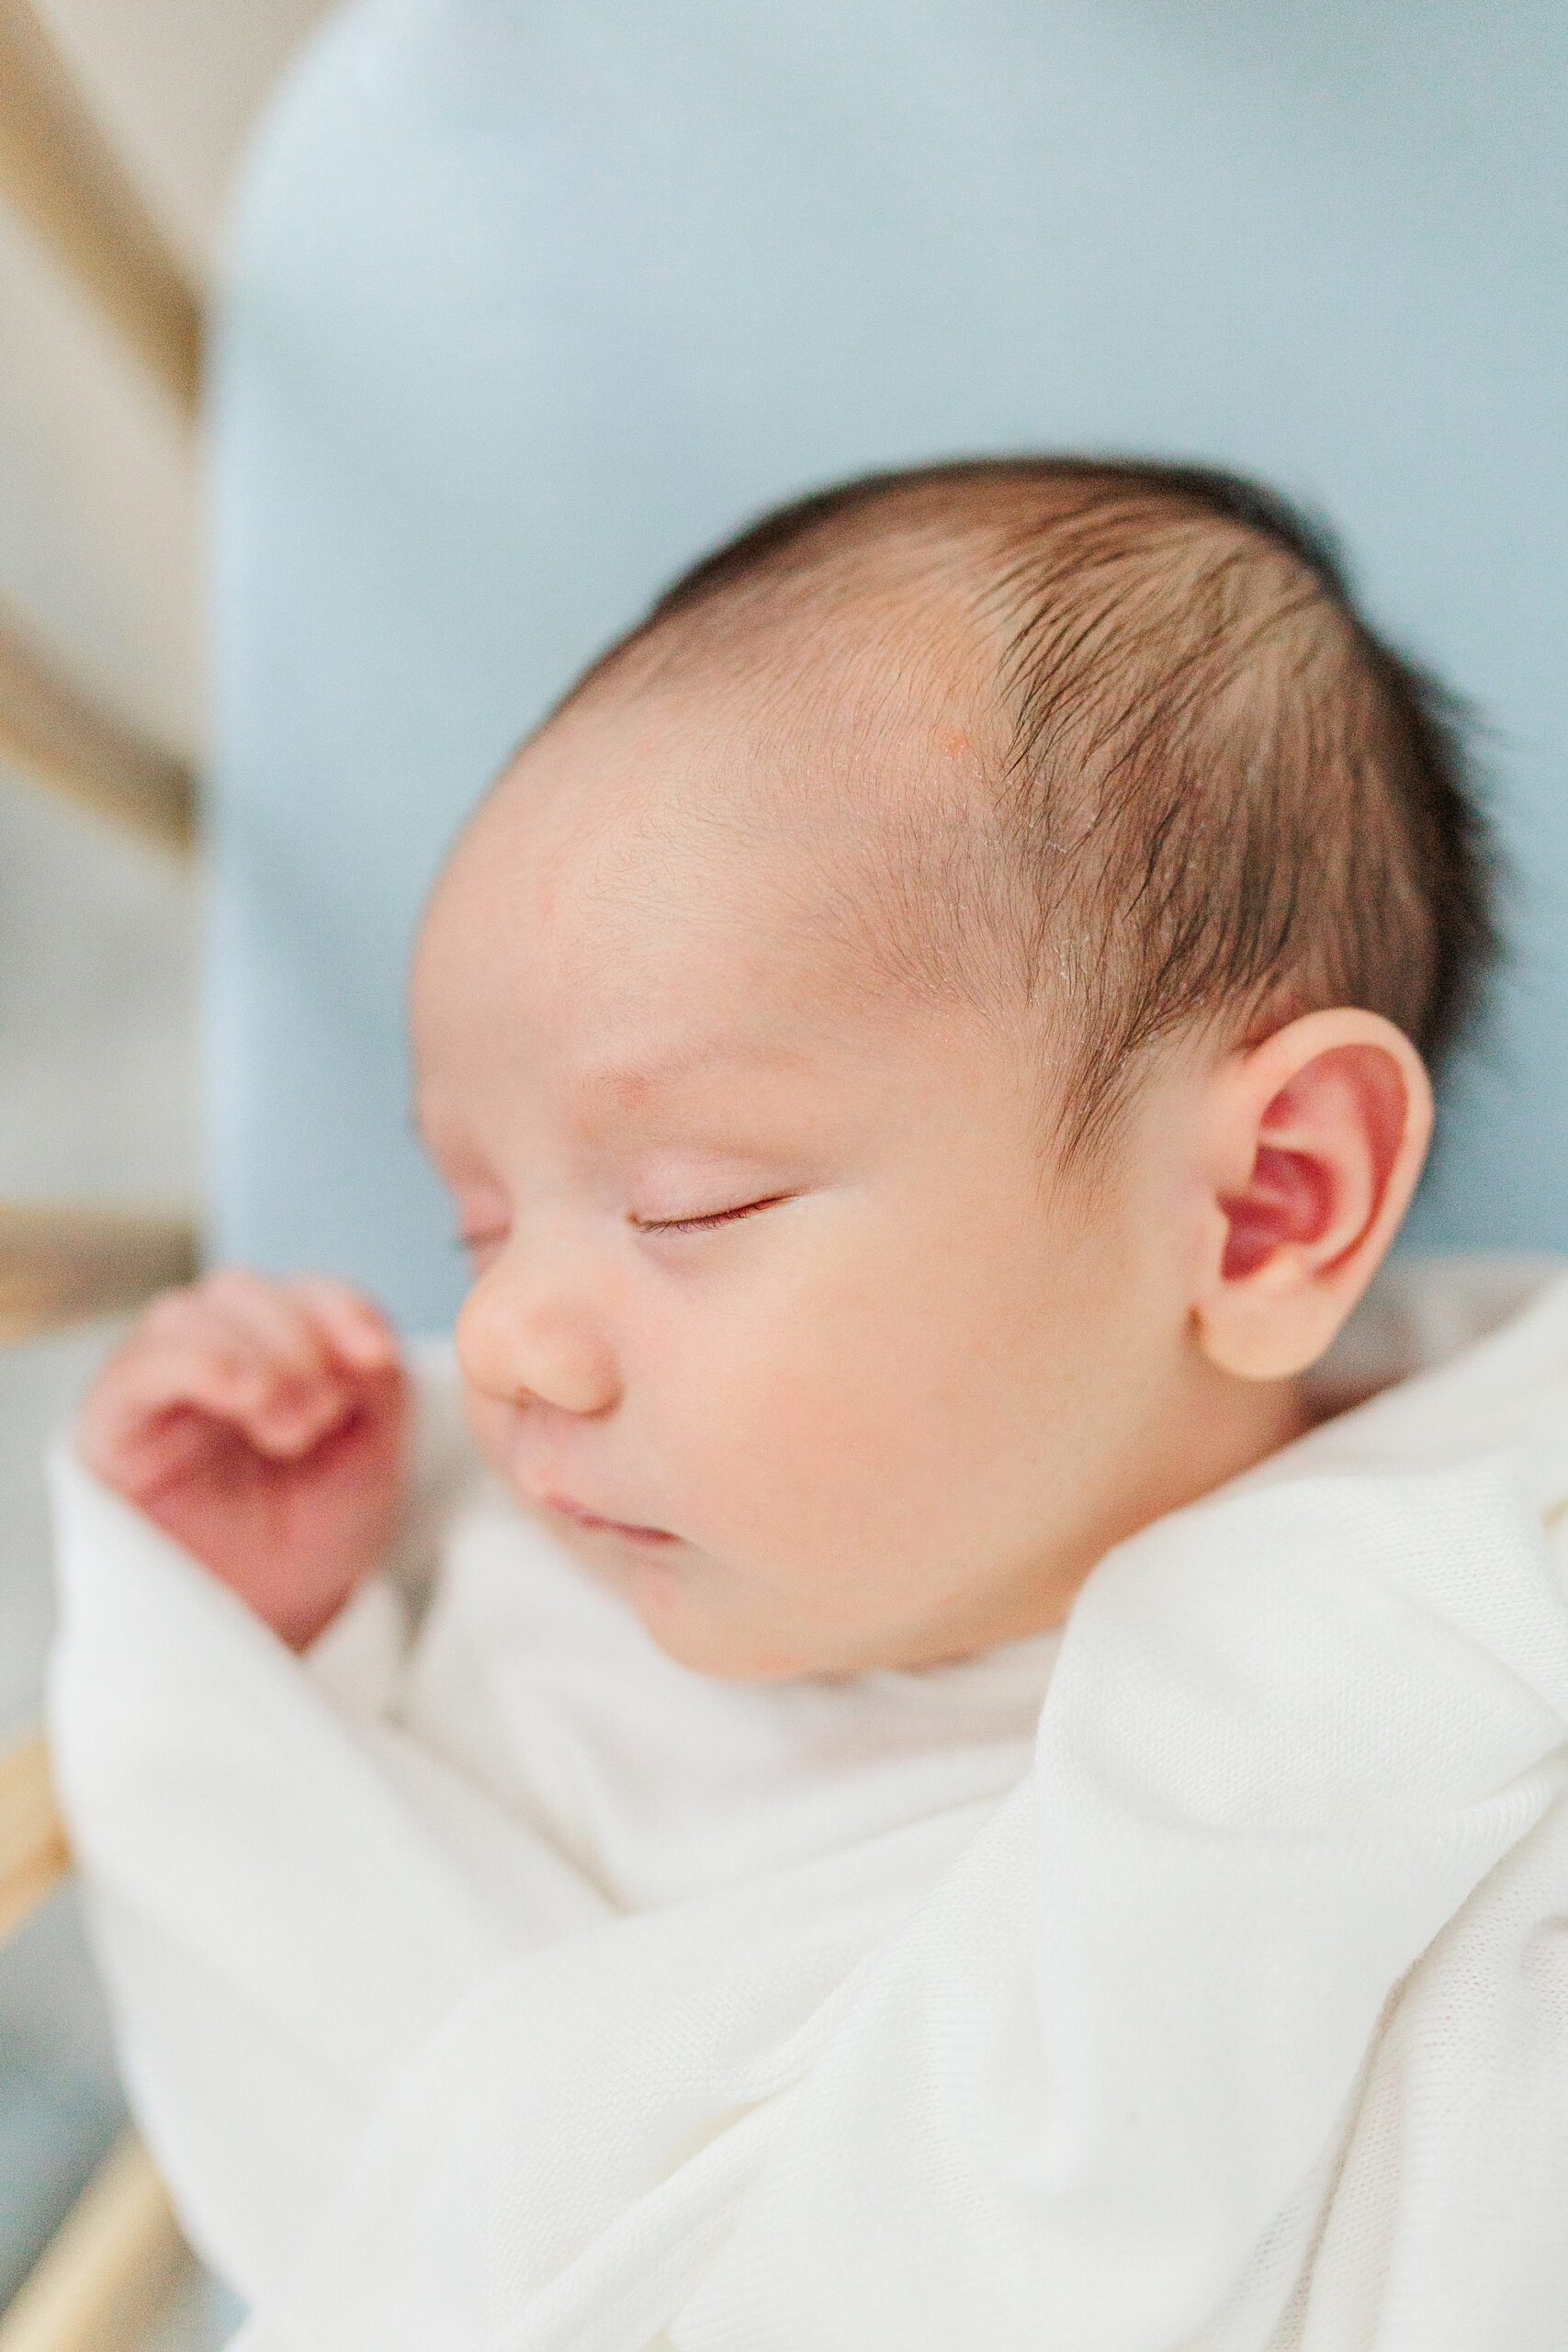 baby sleeps on blue crib sheet during Northern Virginia newborn session